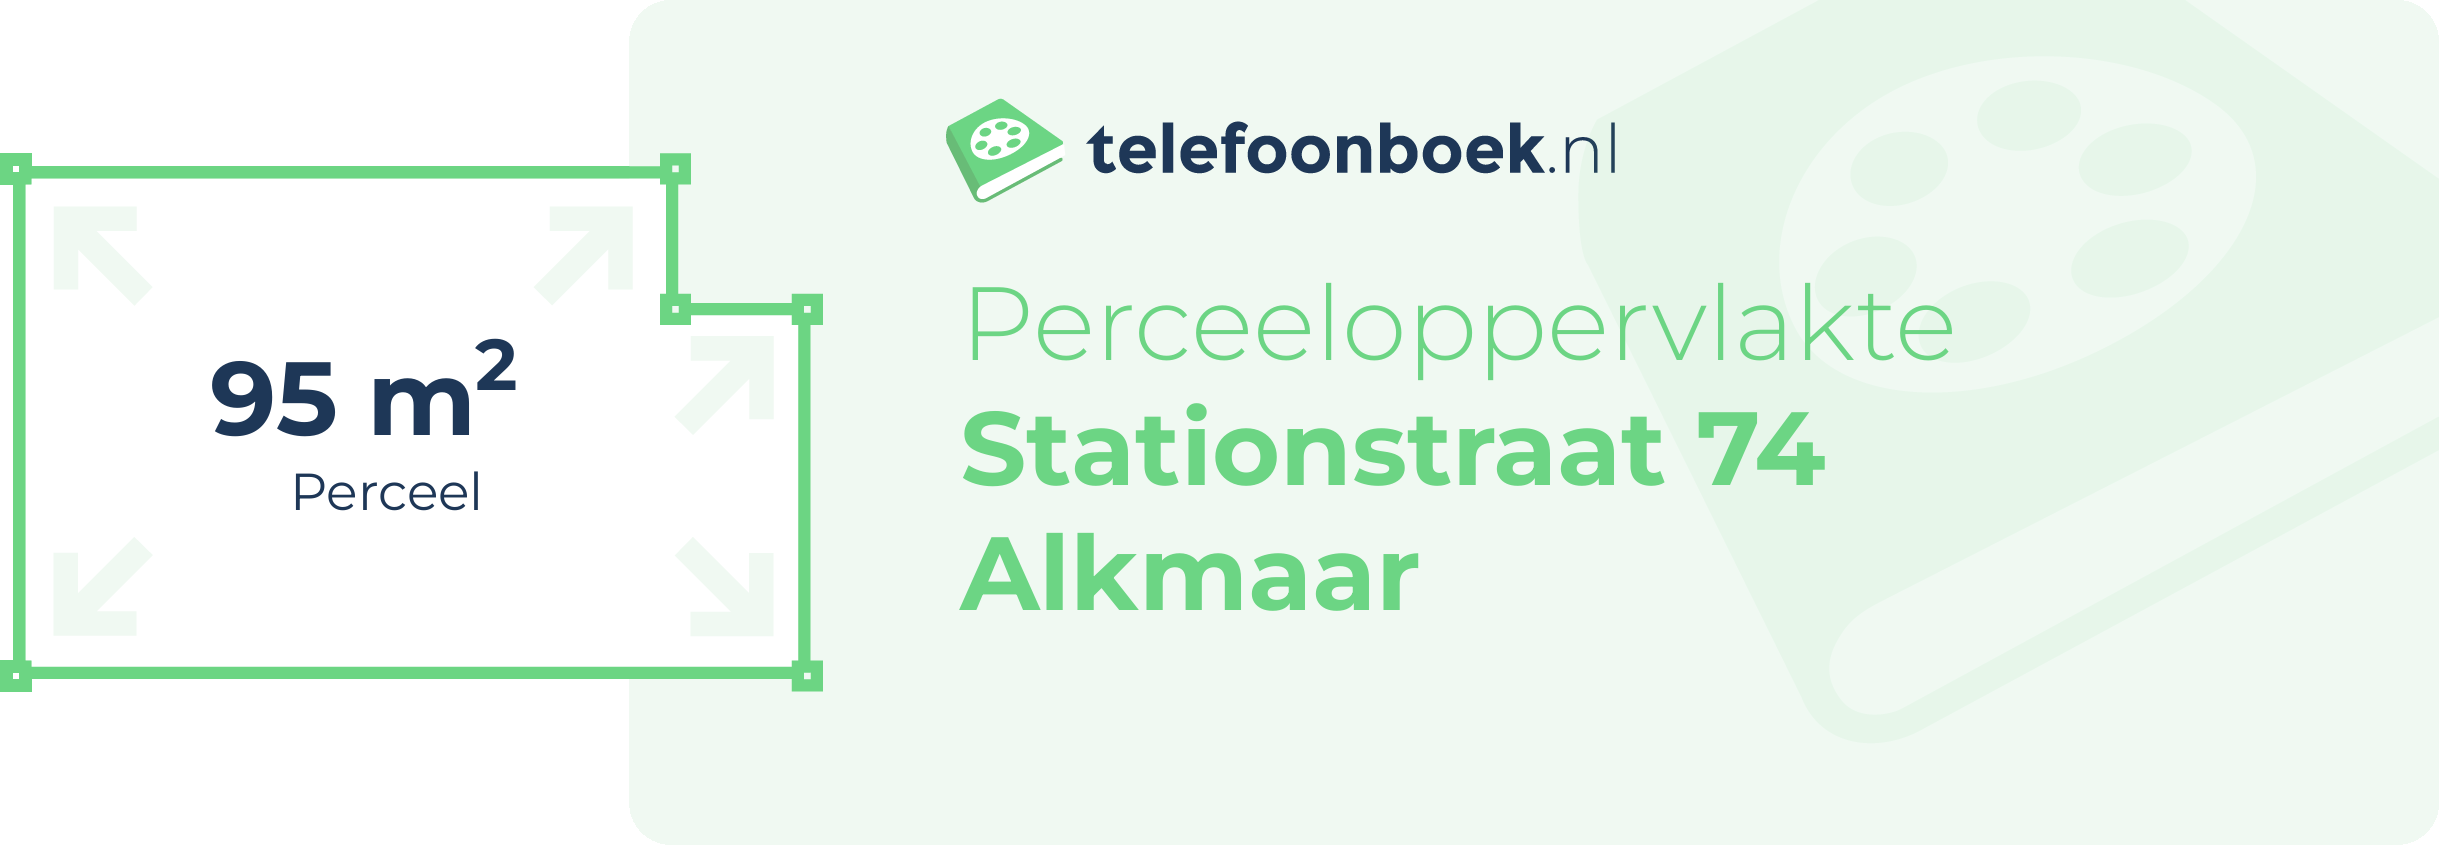 Perceeloppervlakte Stationstraat 74 Alkmaar